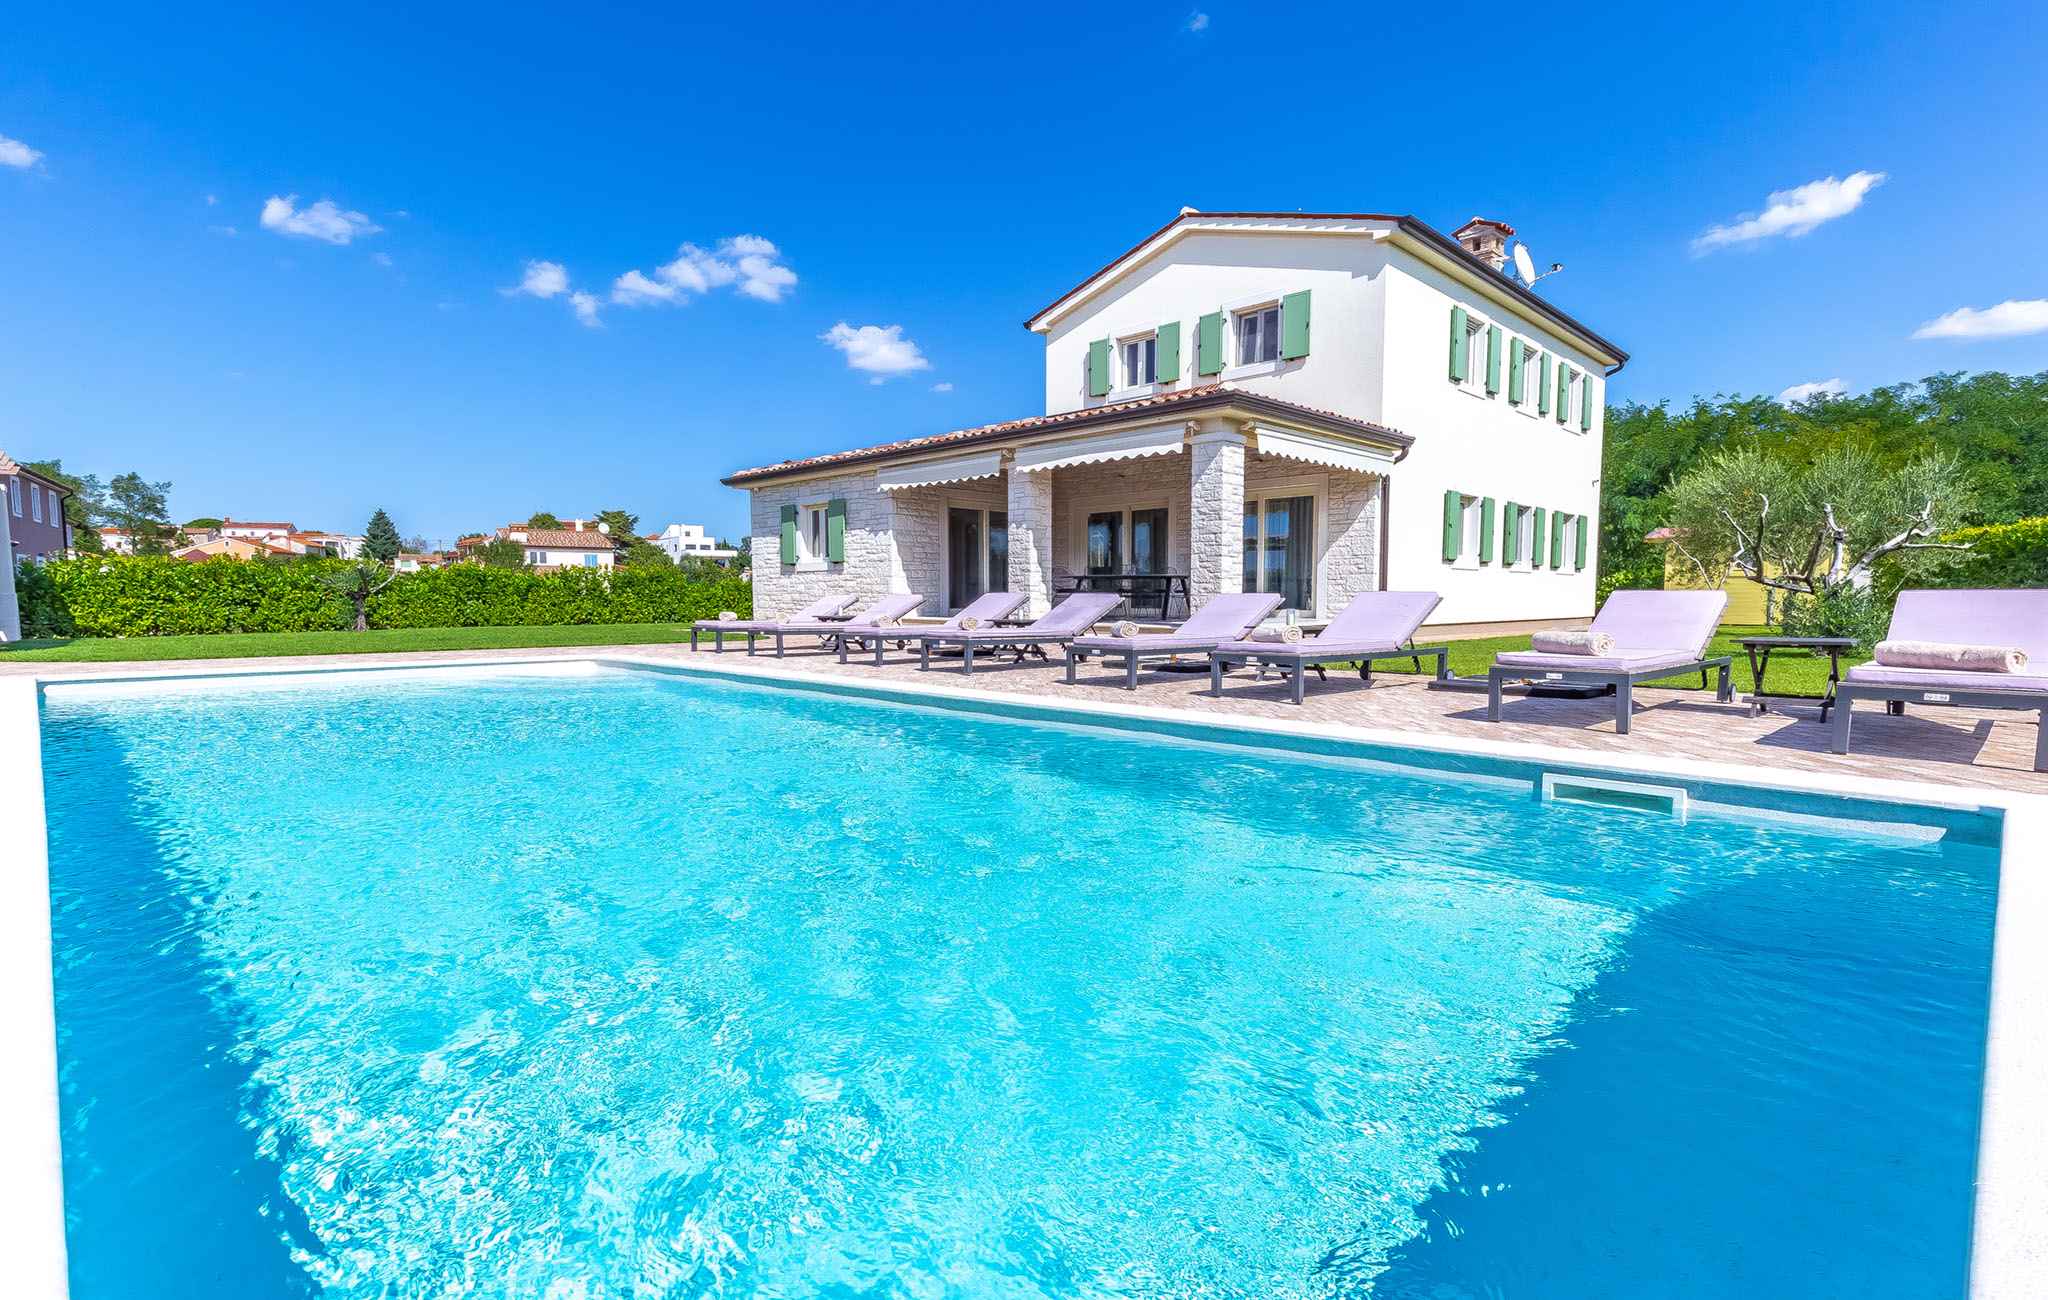 Villa mit Pool und Meerblick Ferienhaus in Kroatien